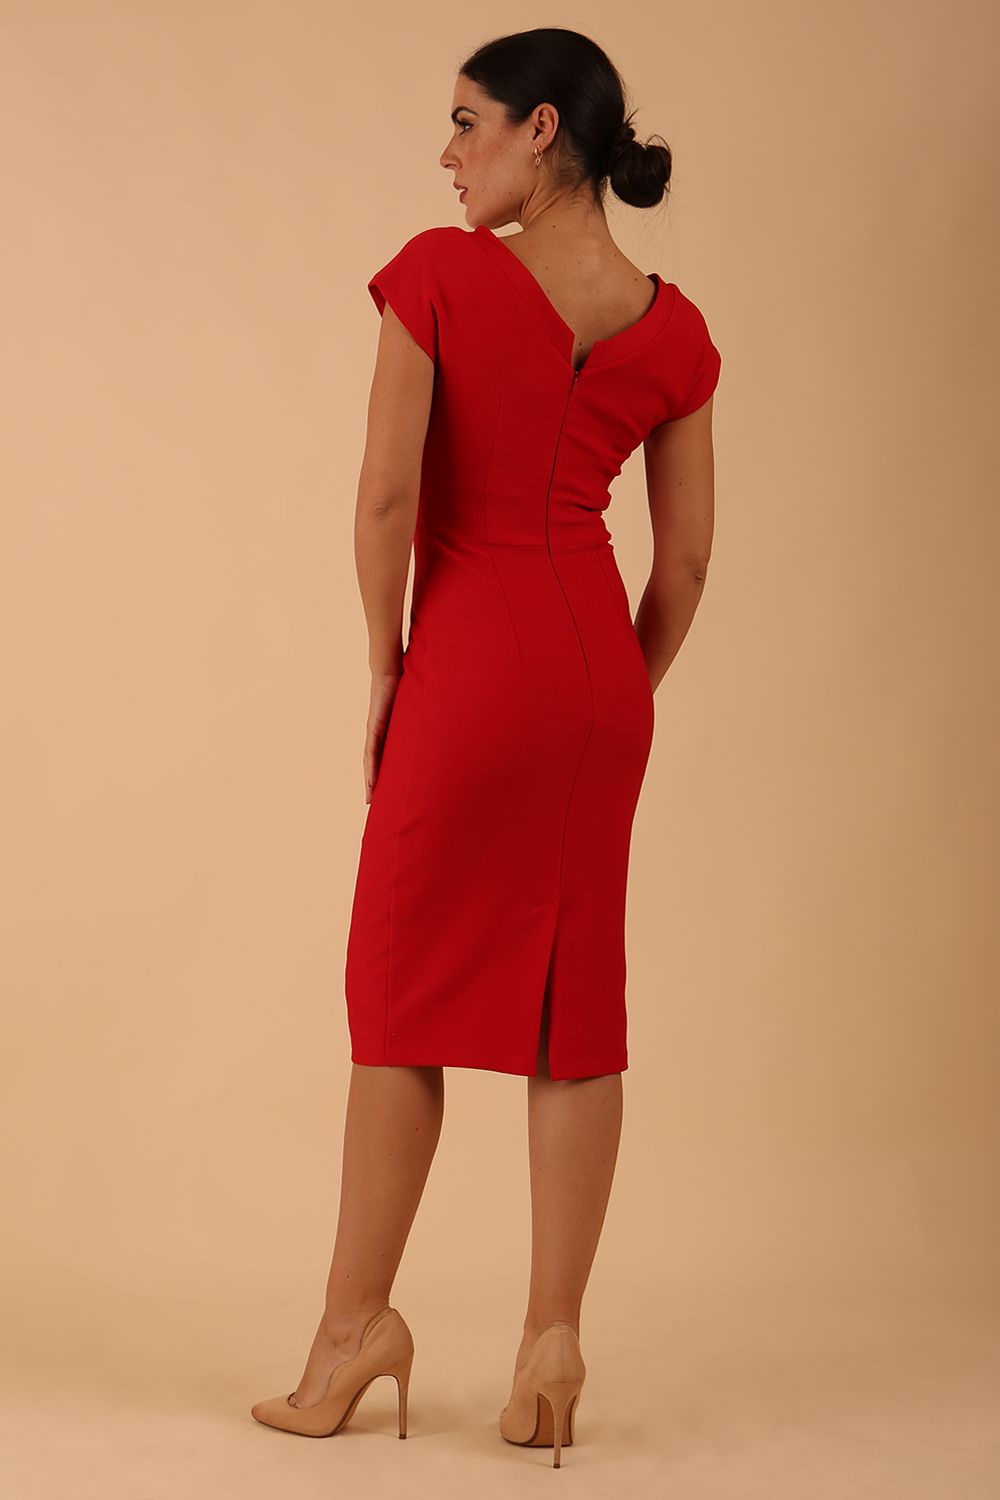 model wearing diva catwalk Seed Leela Rounded Neckline Cap Sleeved Dress in salsa red colour